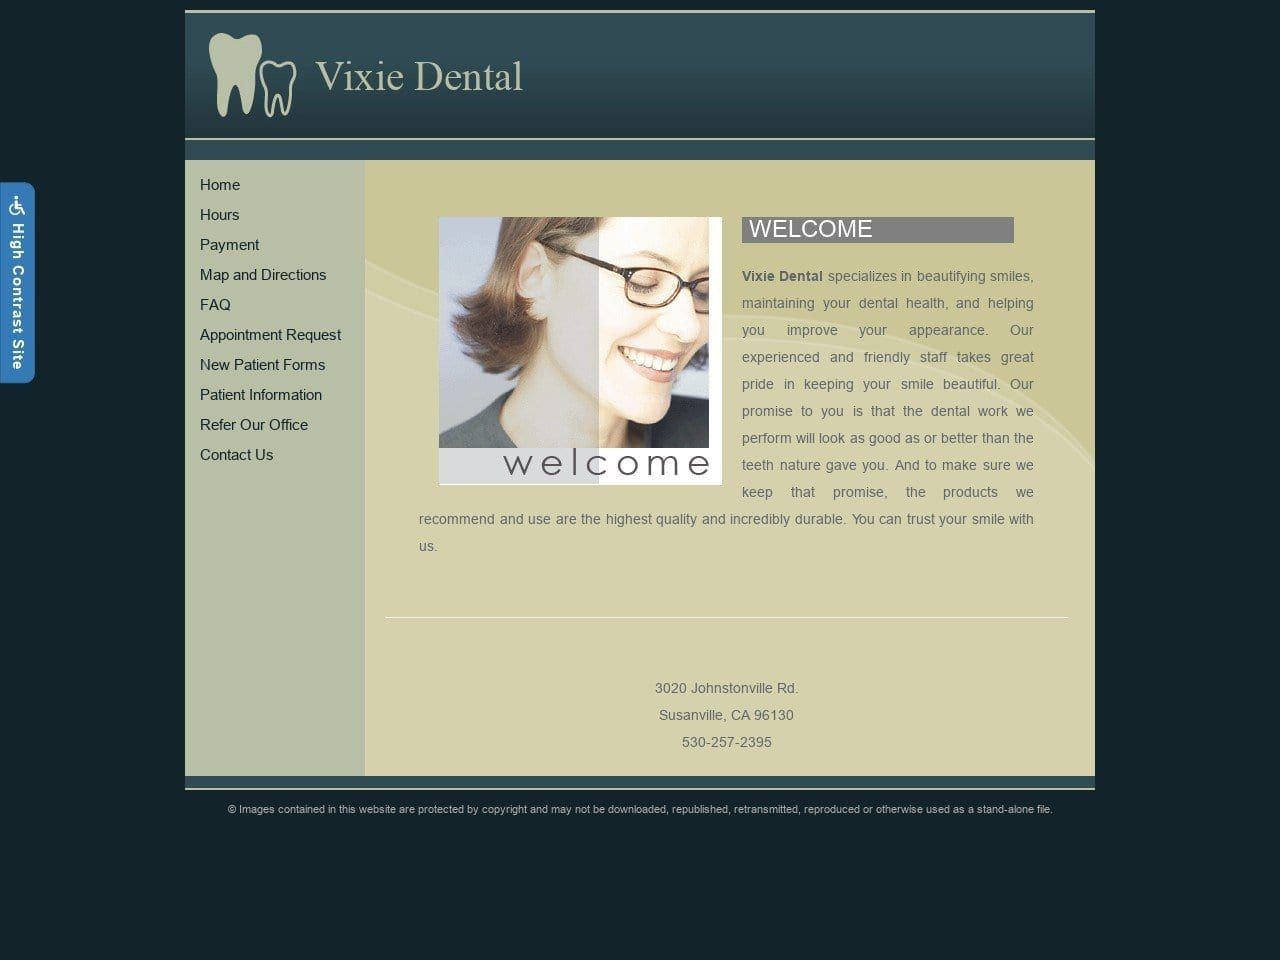 Vixie Dental Website Screenshot from vixiedental.com